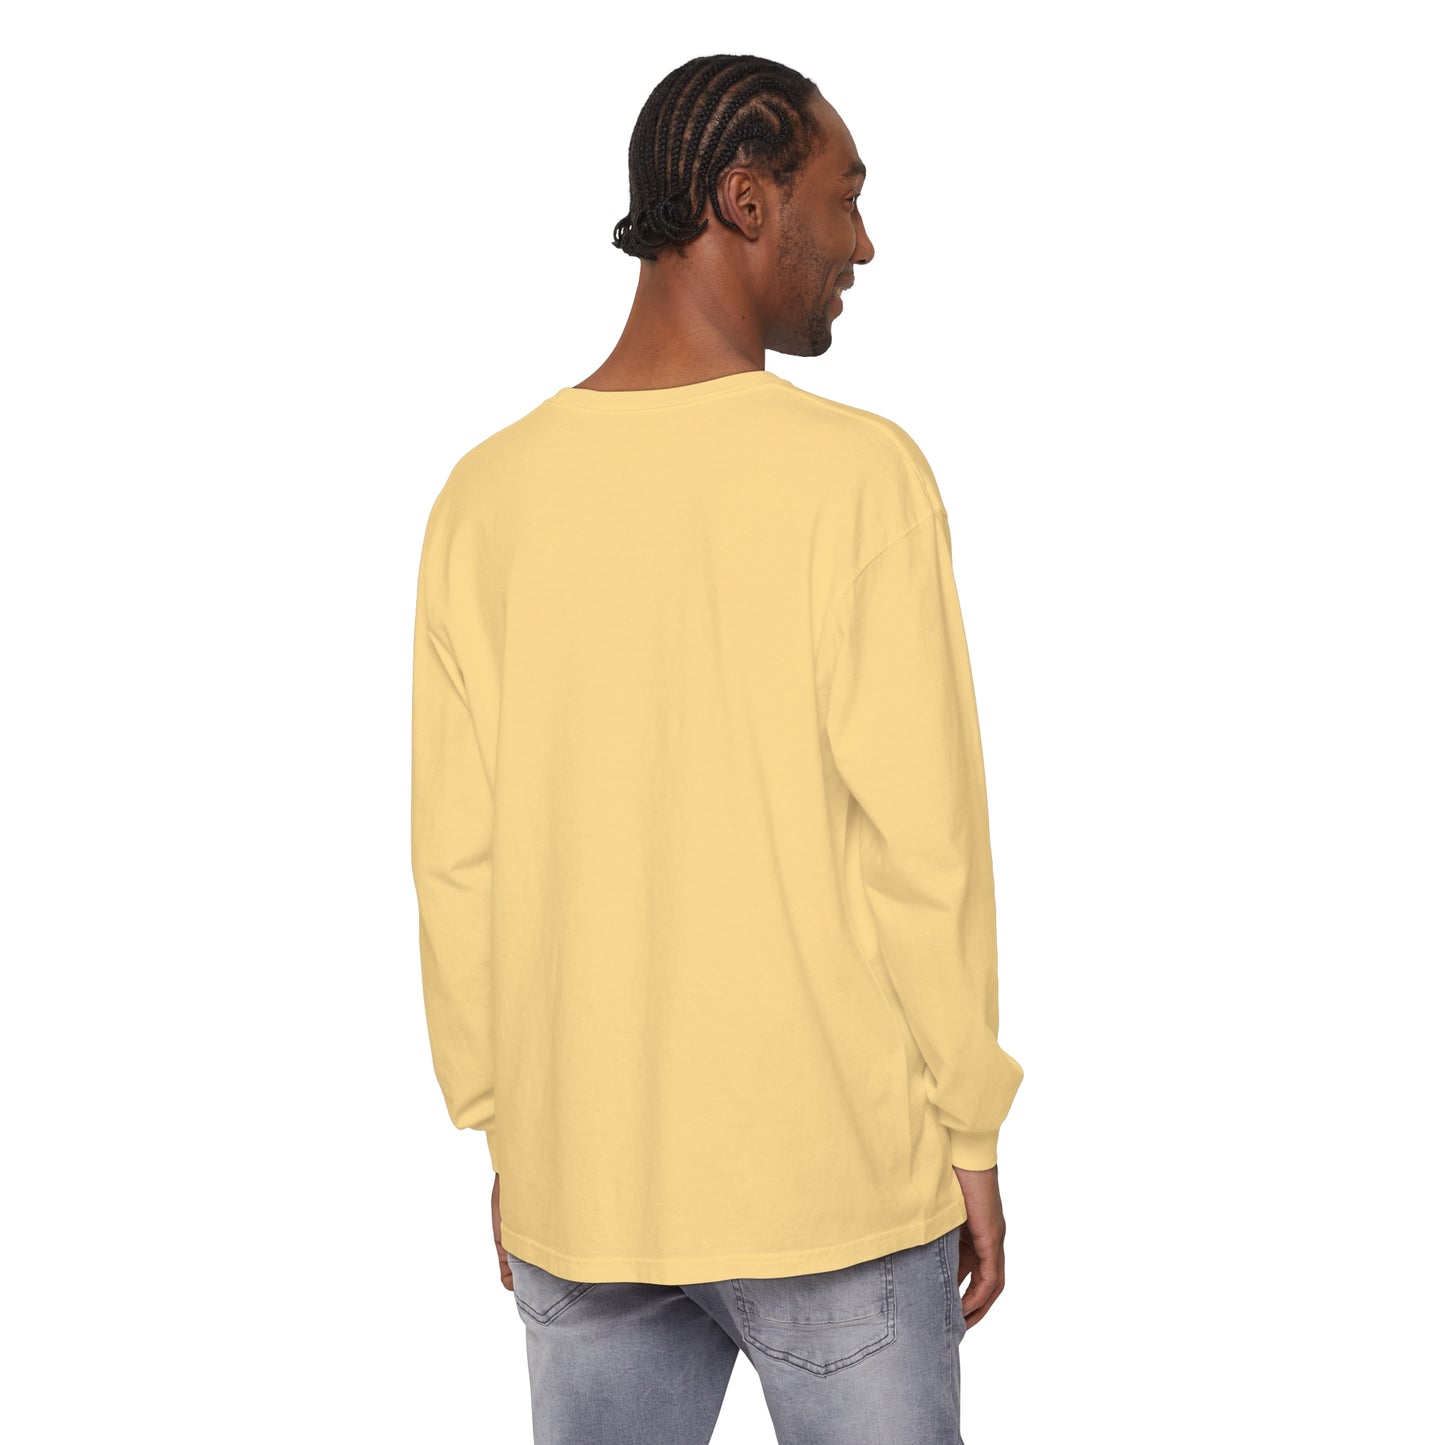 Beasts & Botanicals Logo Unisex Long Sleeve Comfort Colors T-Shirt